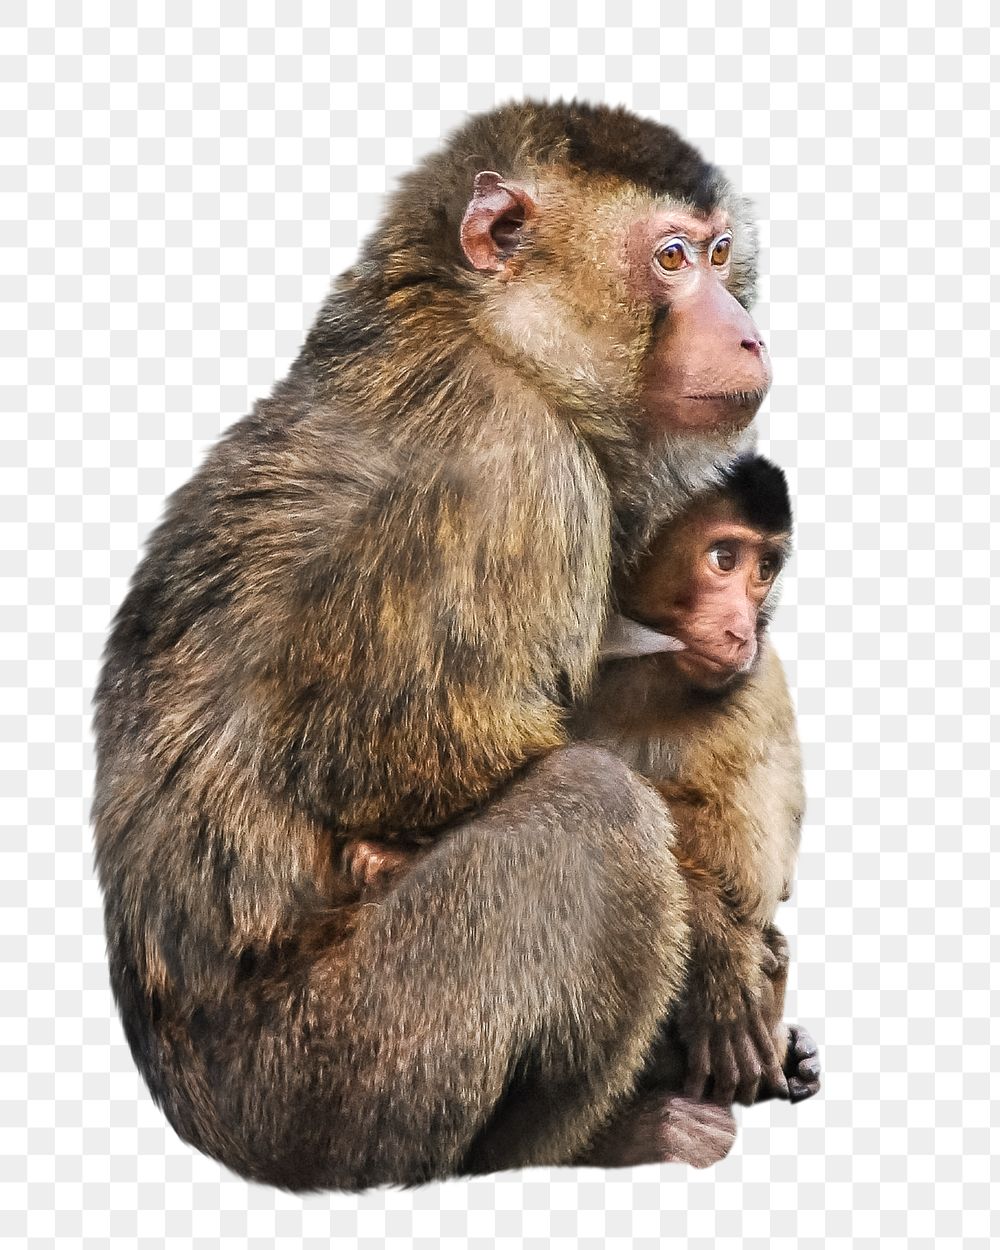 Breastfeeding monkey png collage element, transparent background